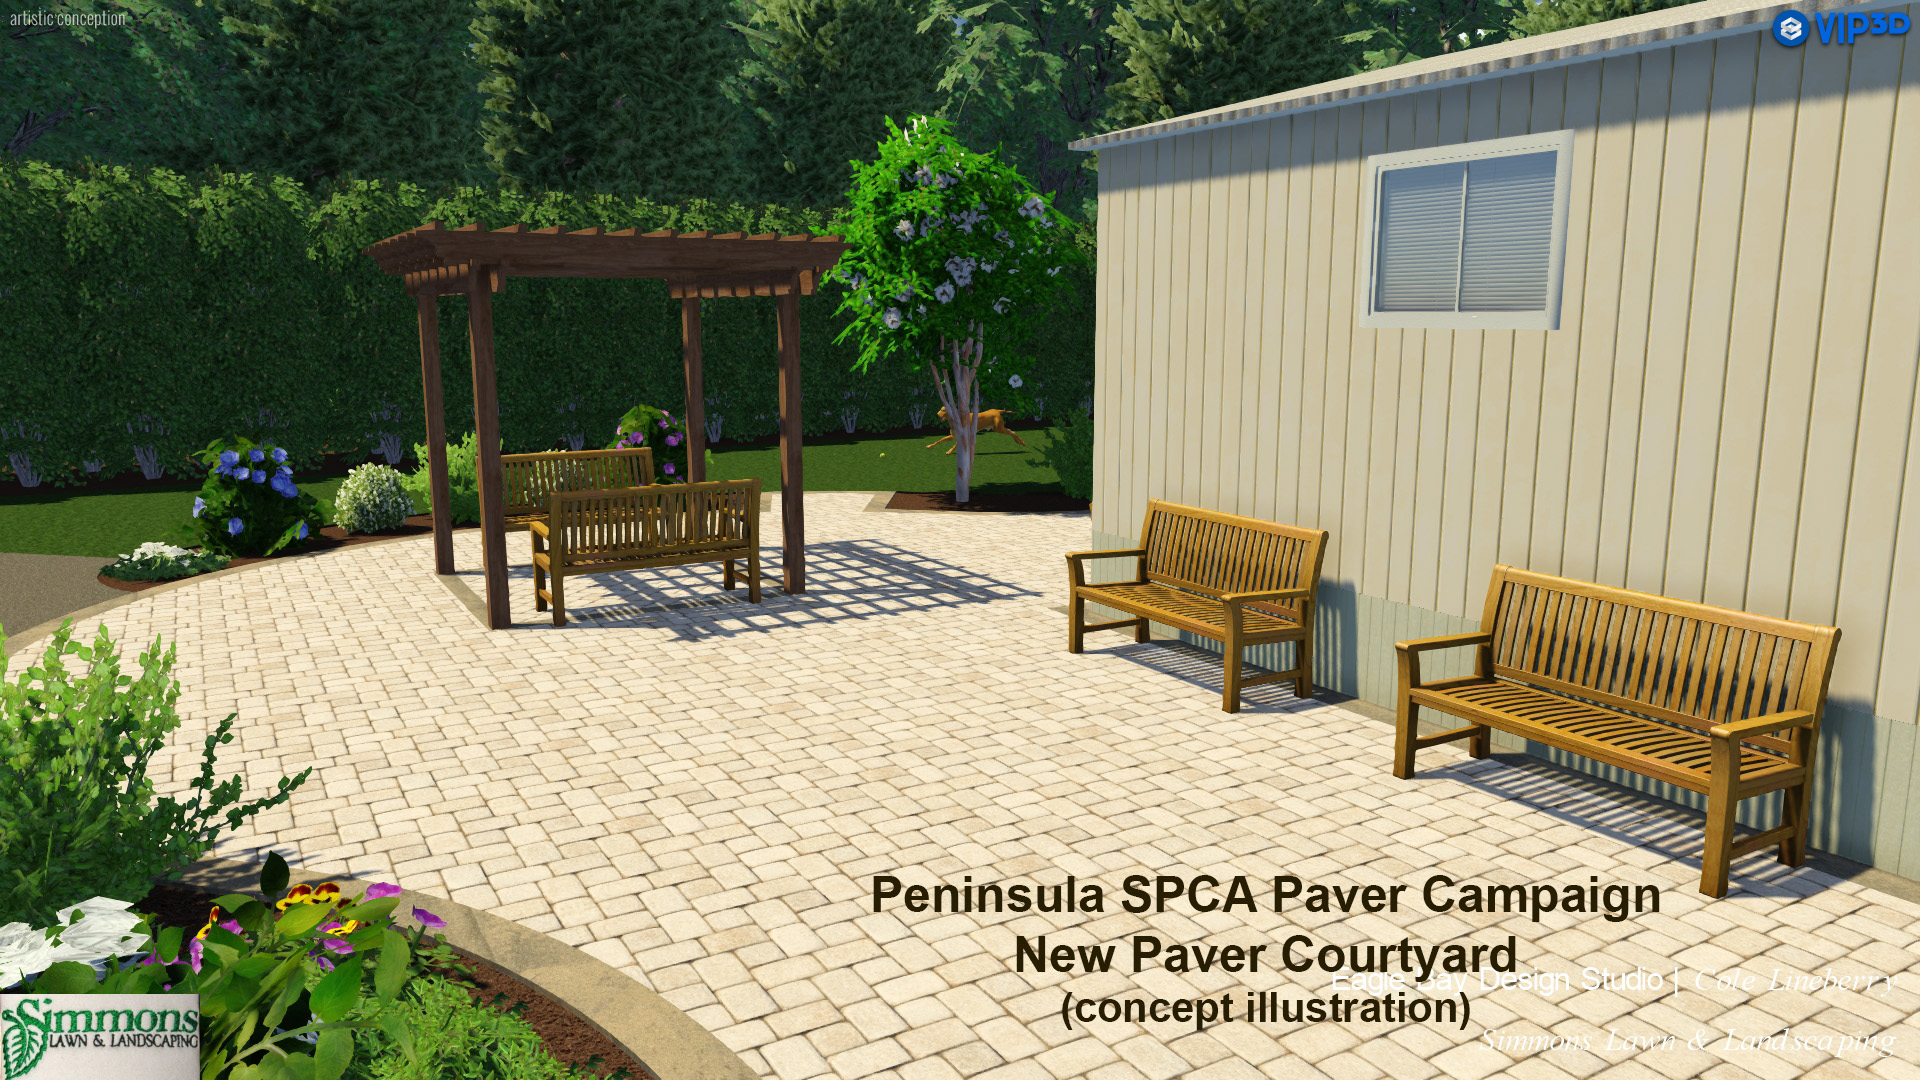 Peninsula SPCA Peninsula SPCA 2019 Paver Campaign